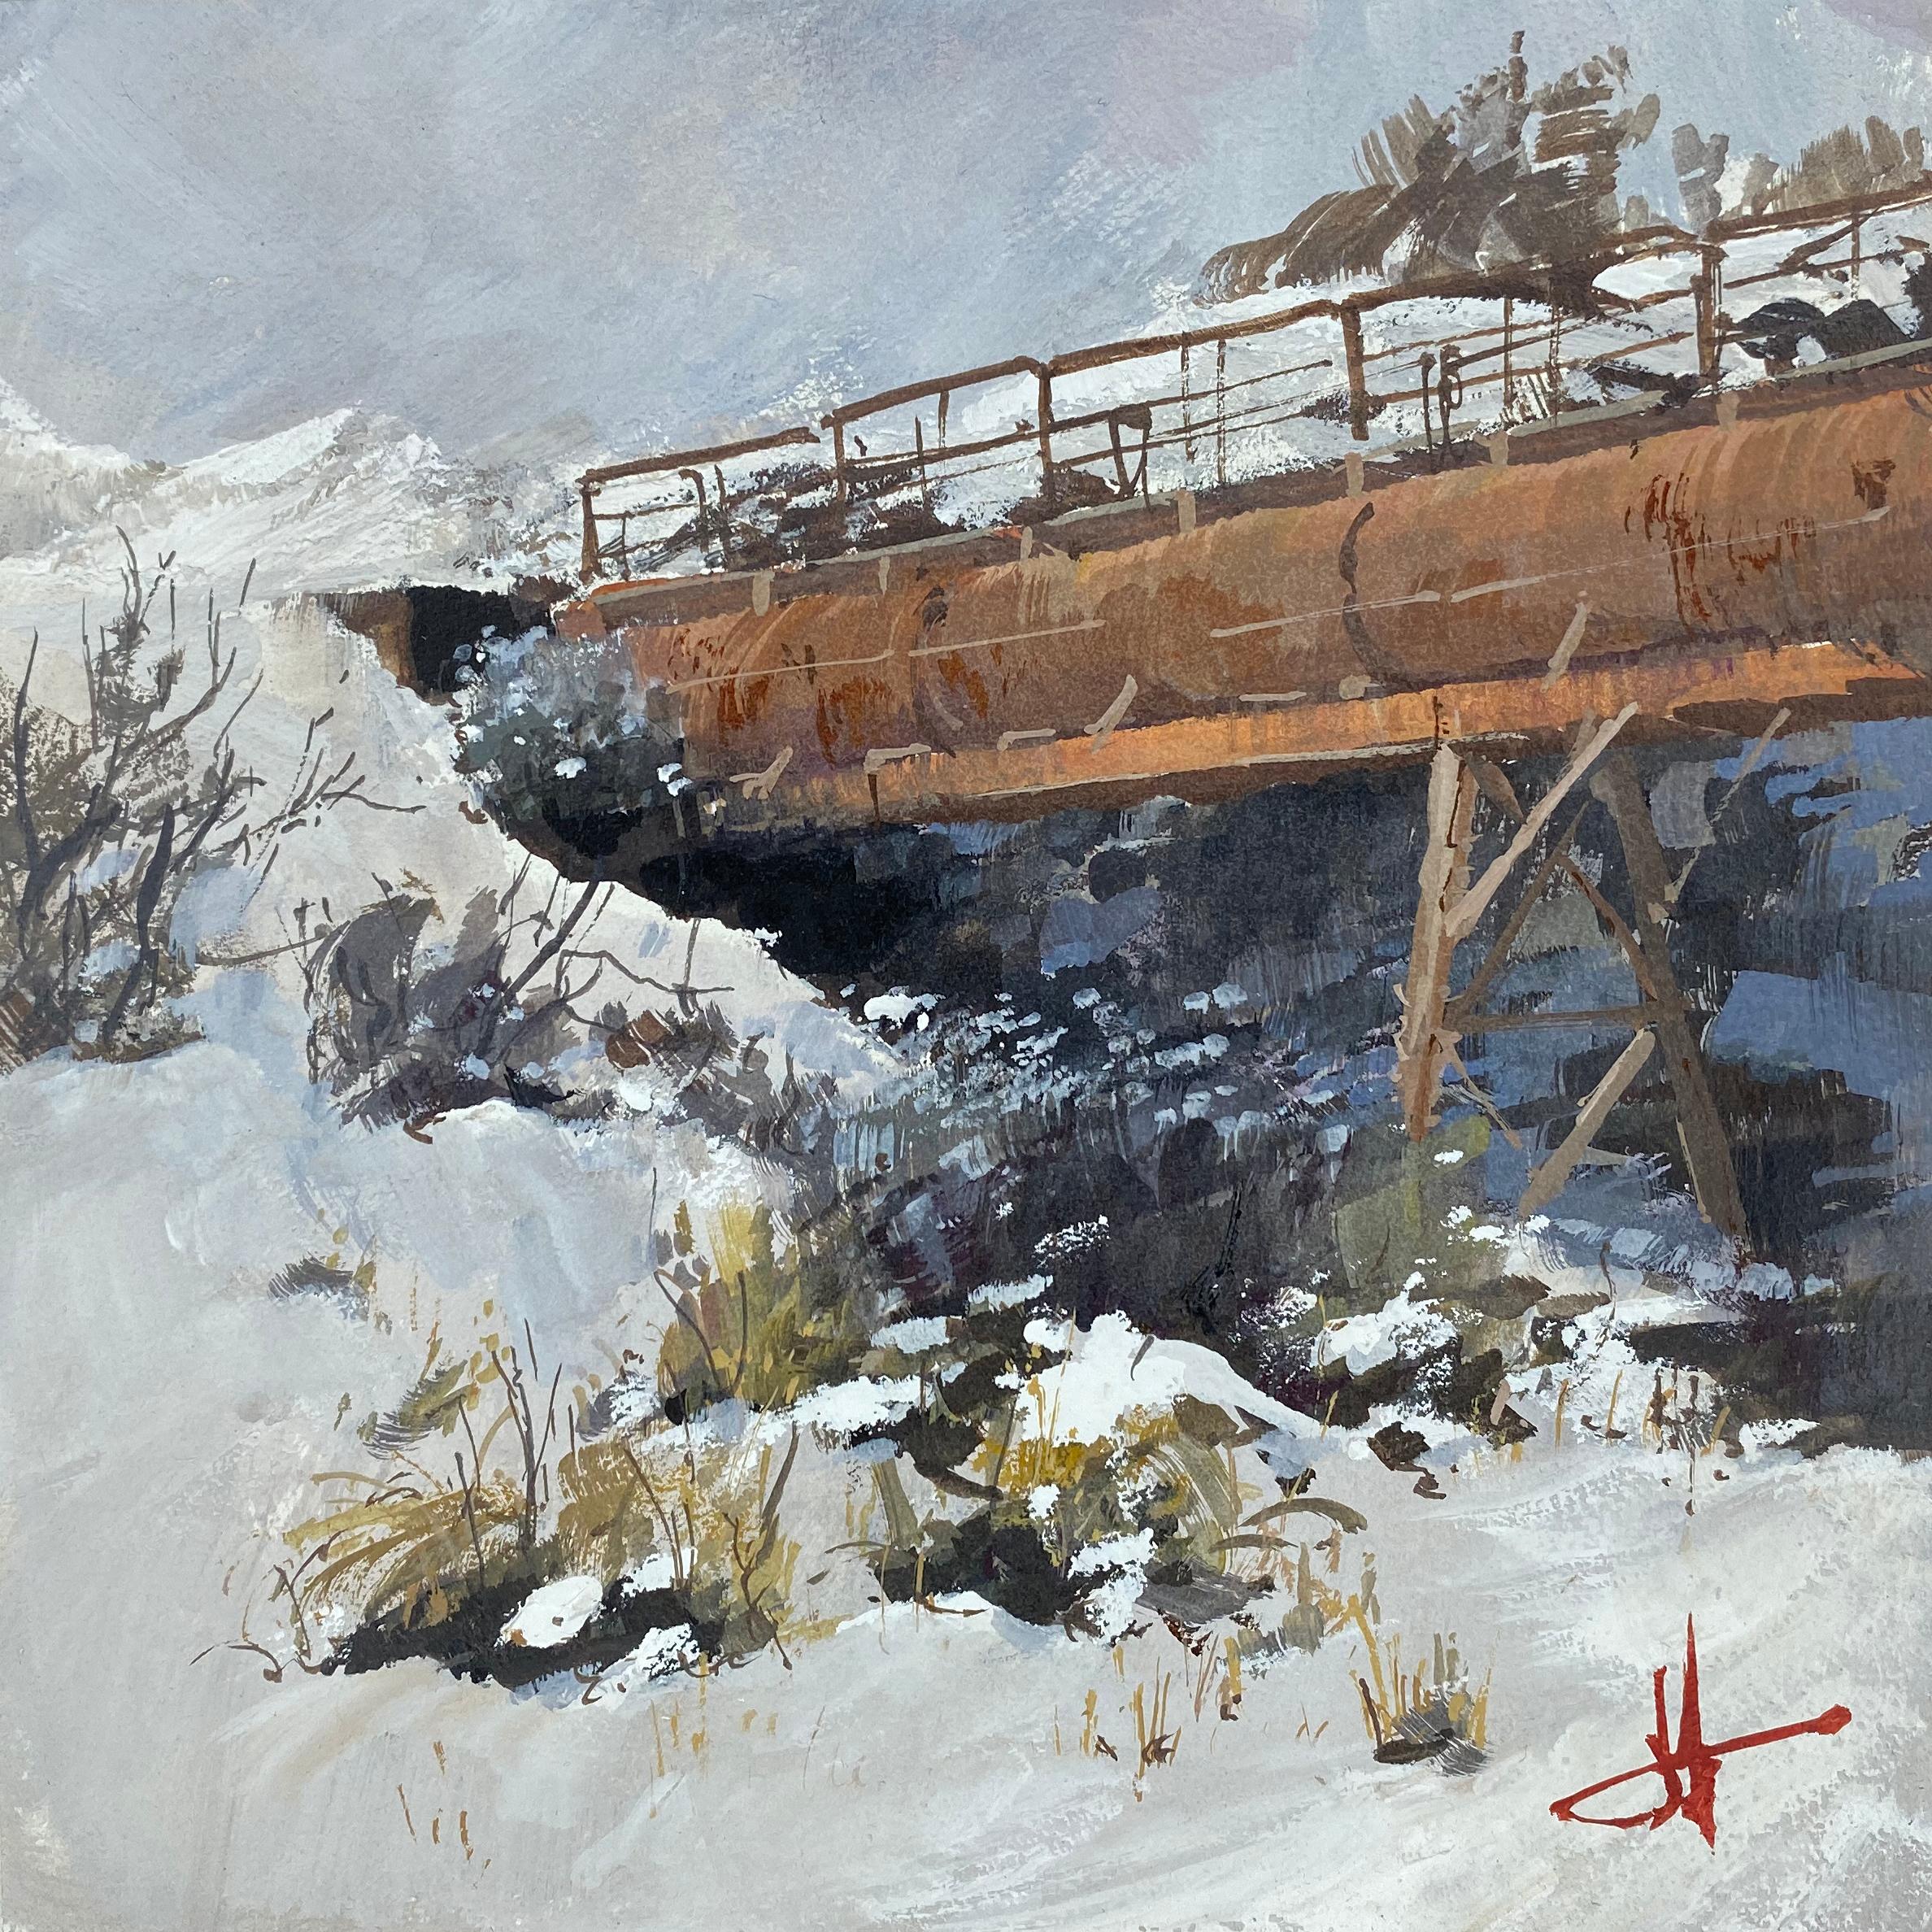 Judd Mercer Landscape Painting - "Pipe Dream" Gouache Painting